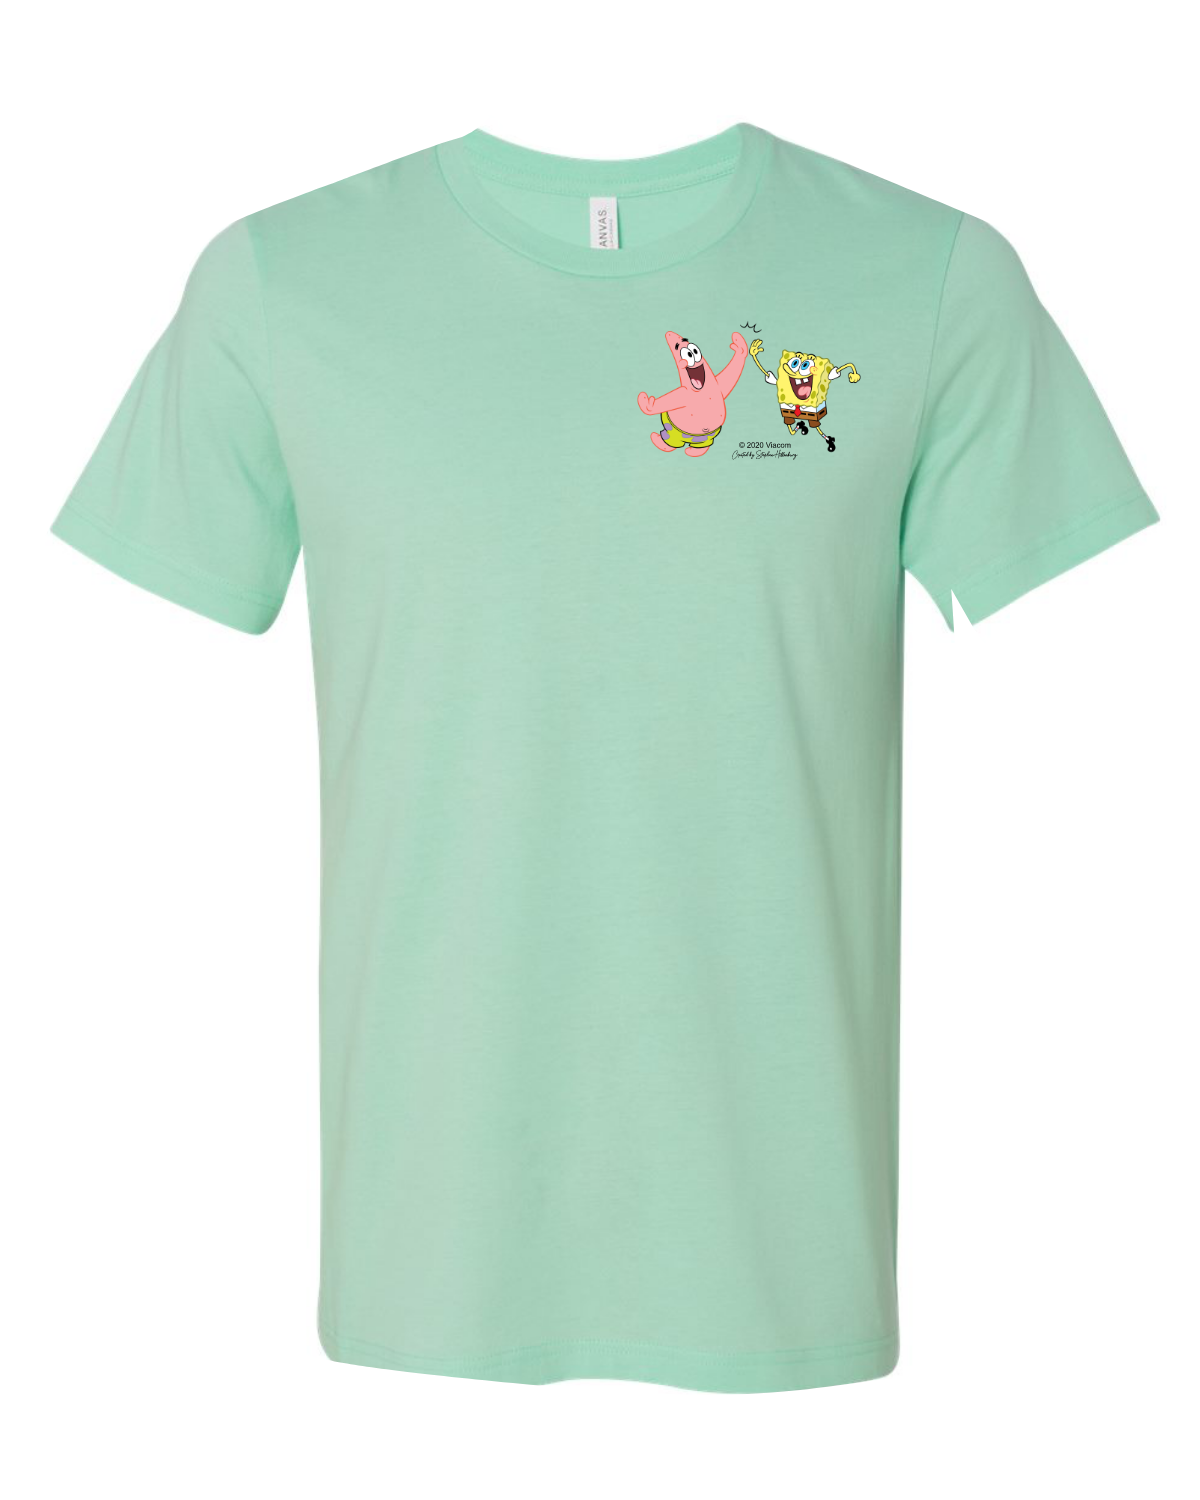 SpongeBob SquarePants Do Stuff Together Pastel Short Sleeve T-Shirt